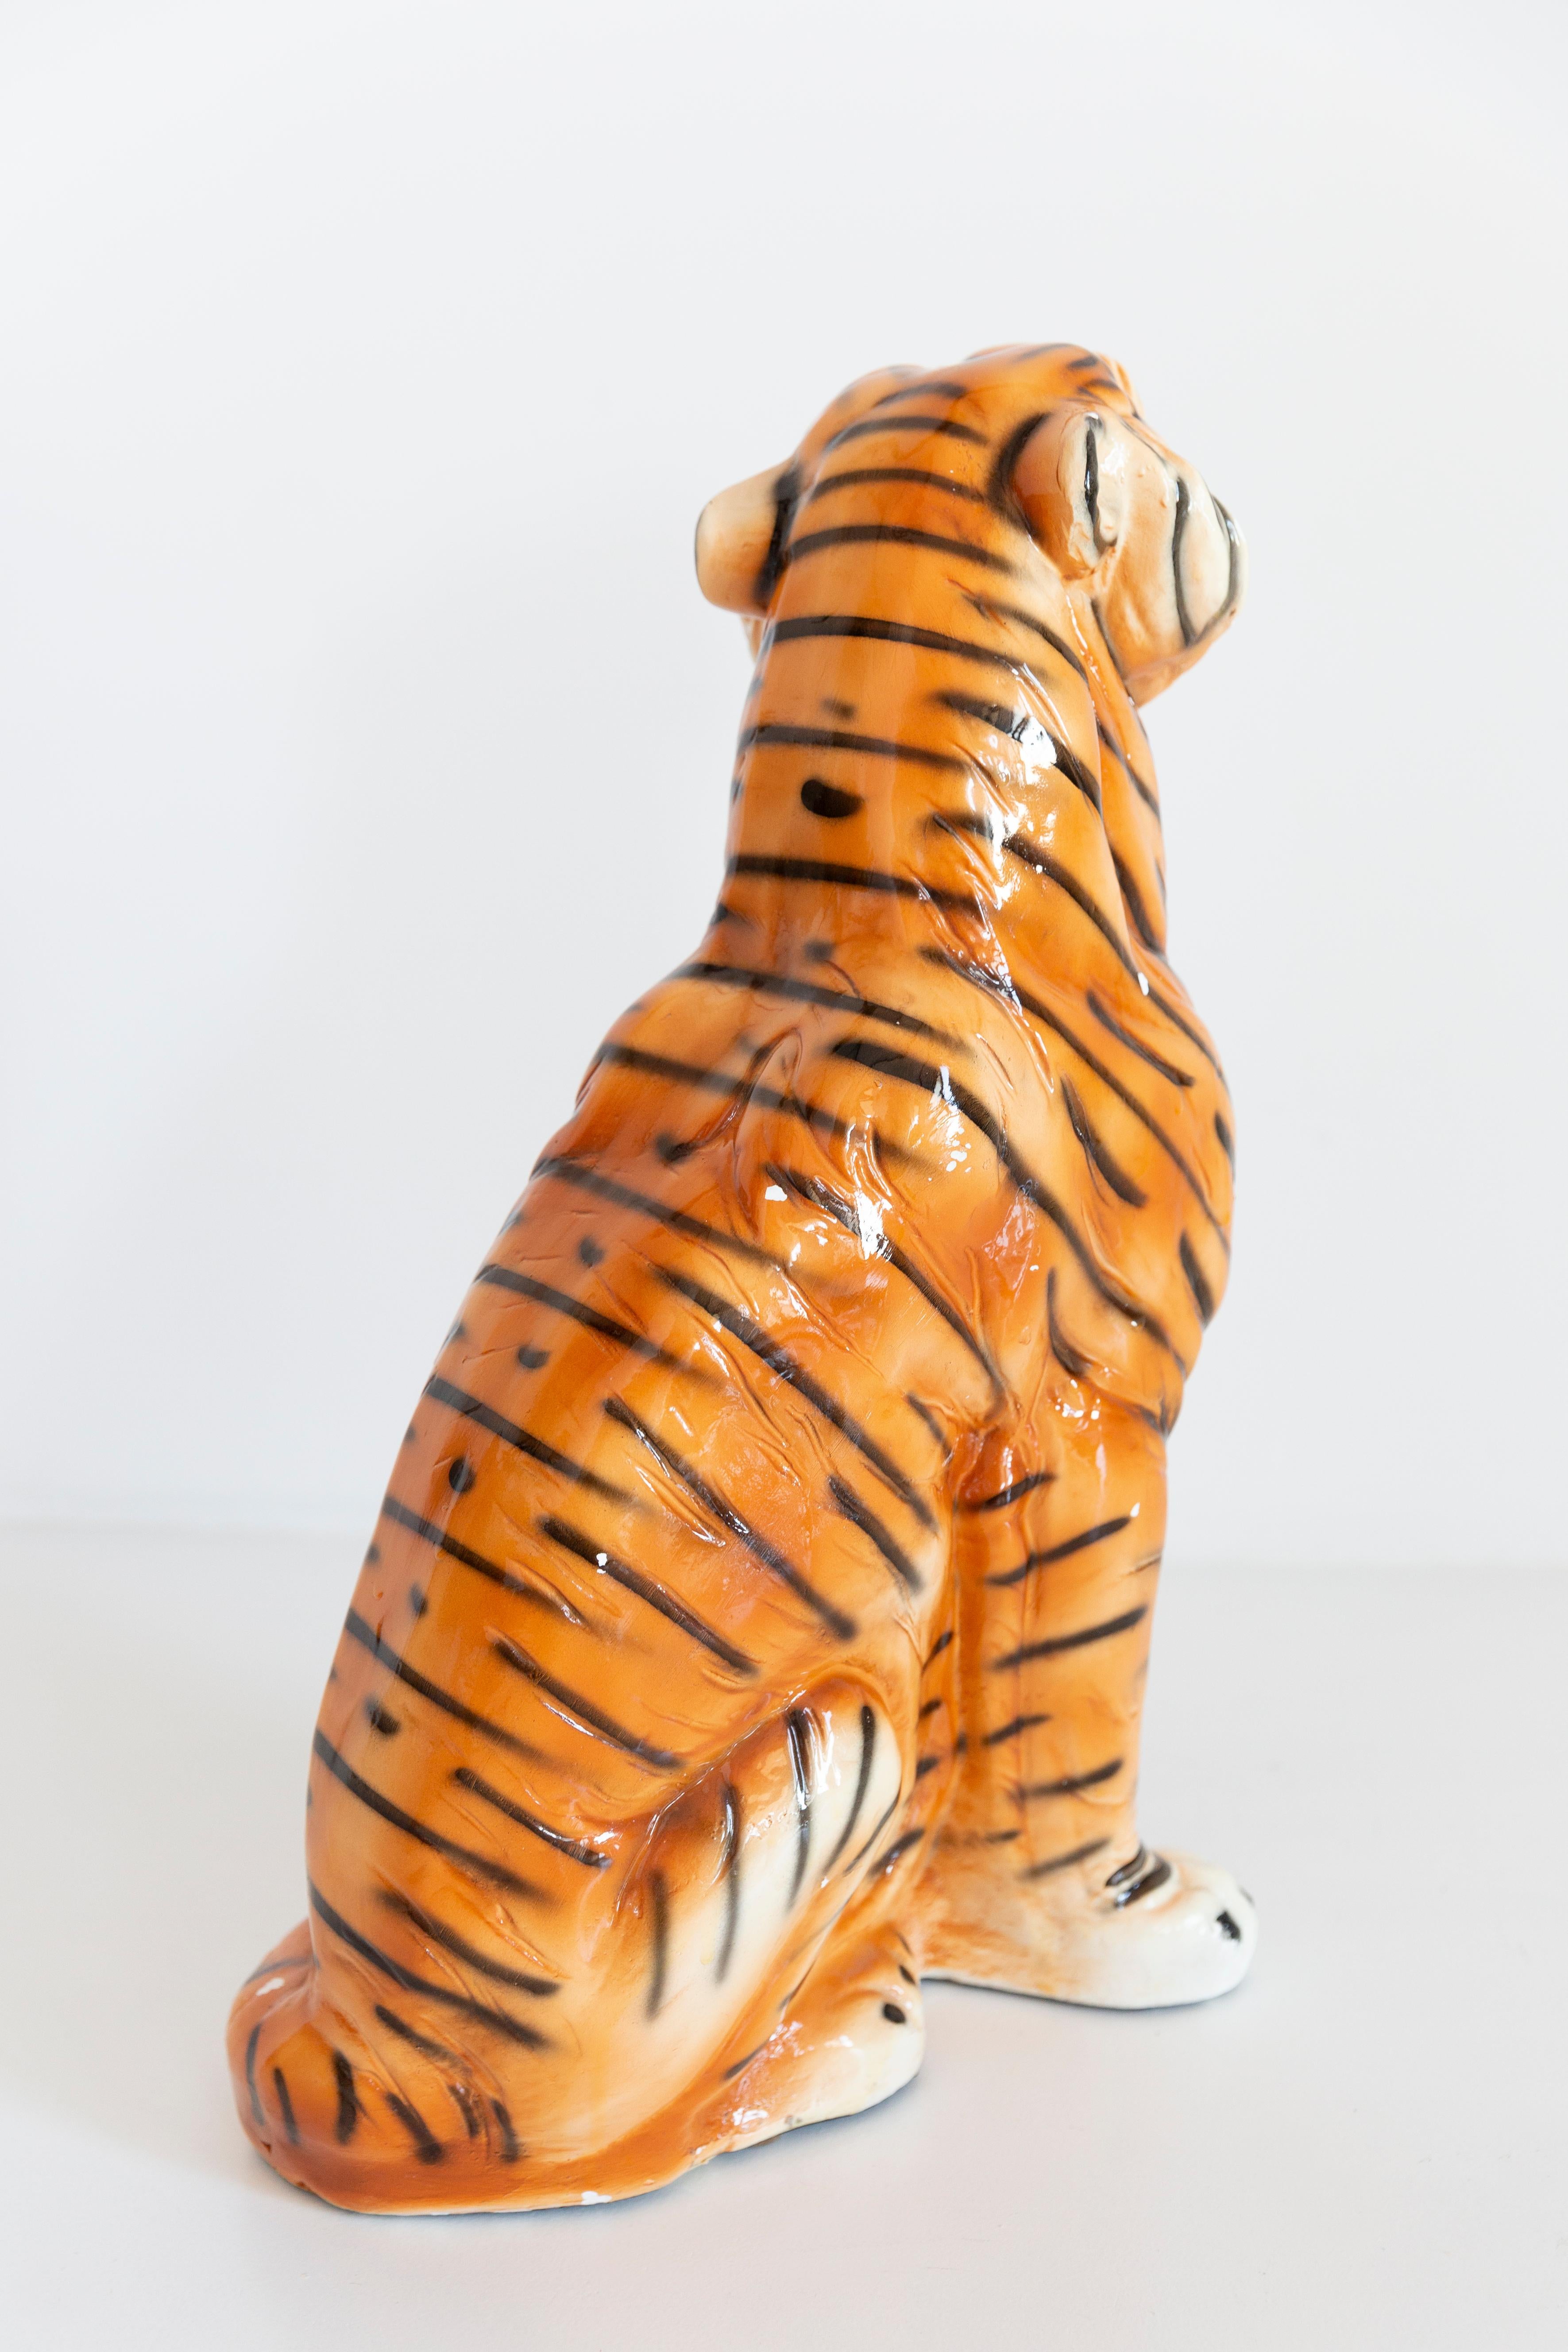 Big Rare Ceramic Tiger Decorative Sculpture, Italy, 1960s For Sale 1